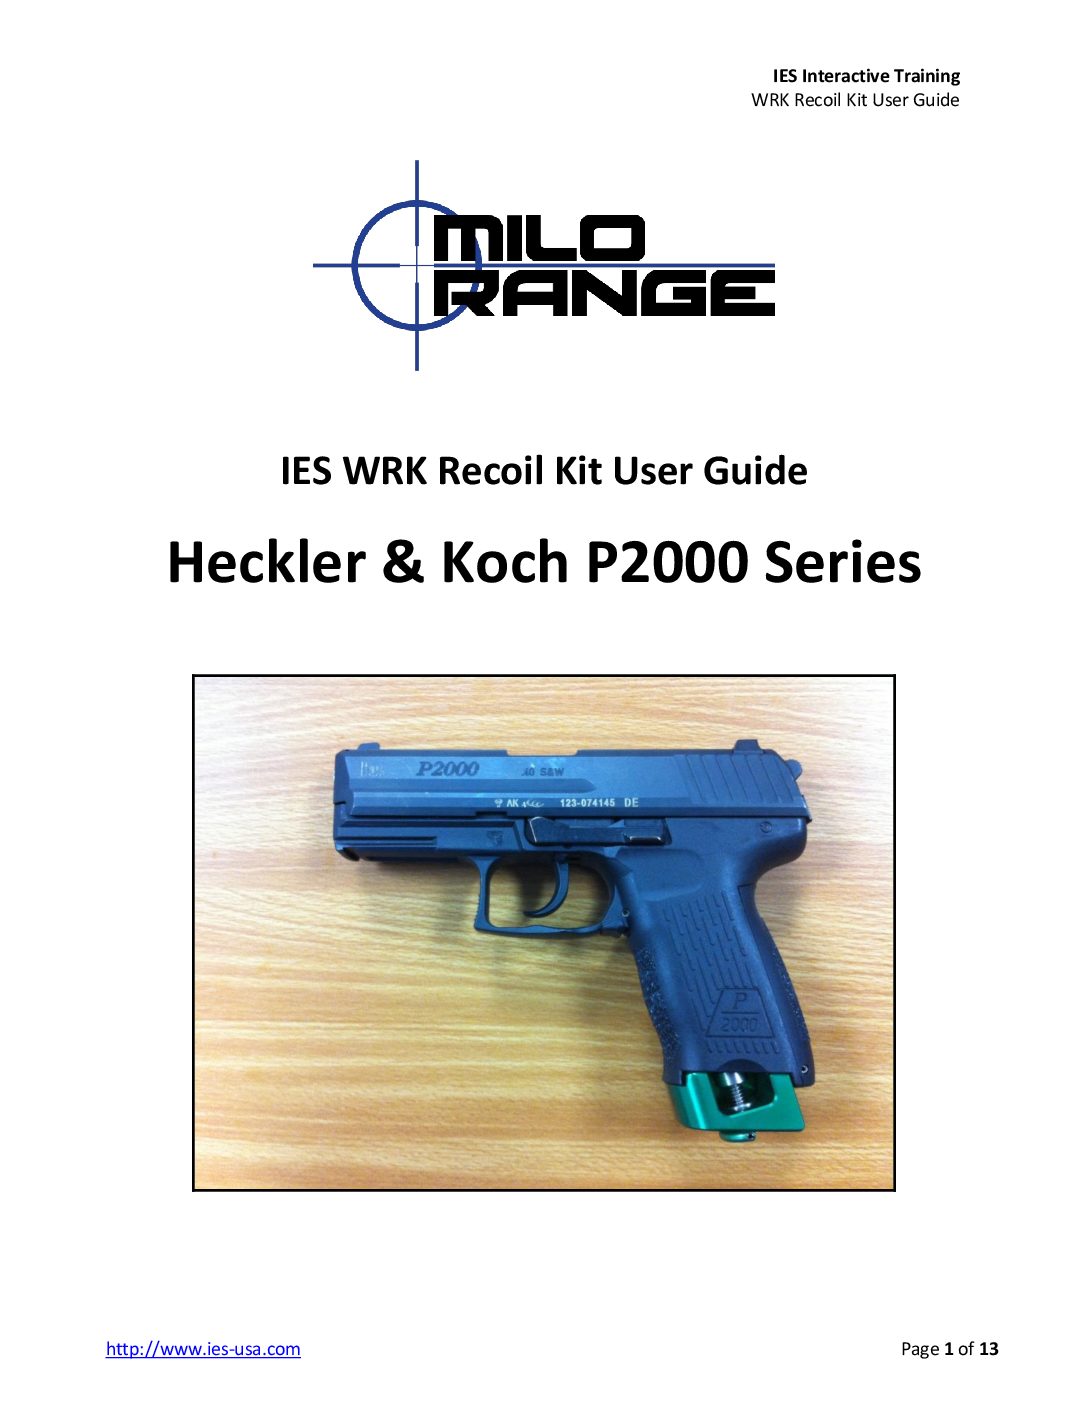 HK P2000 Recoil Kit User Guide